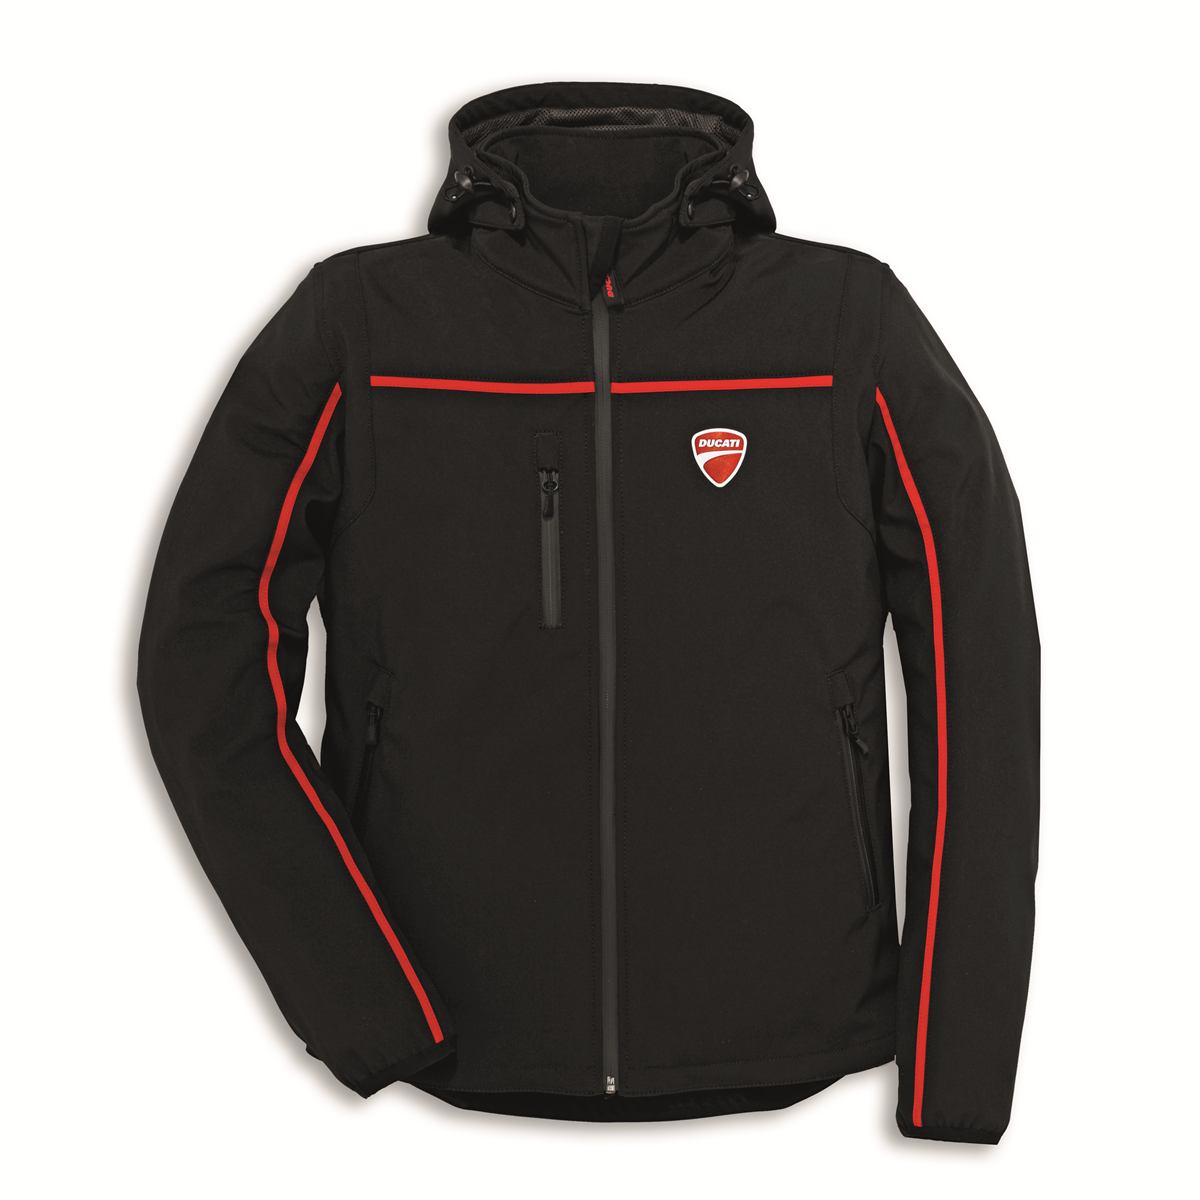 Ducati Redline Jacket